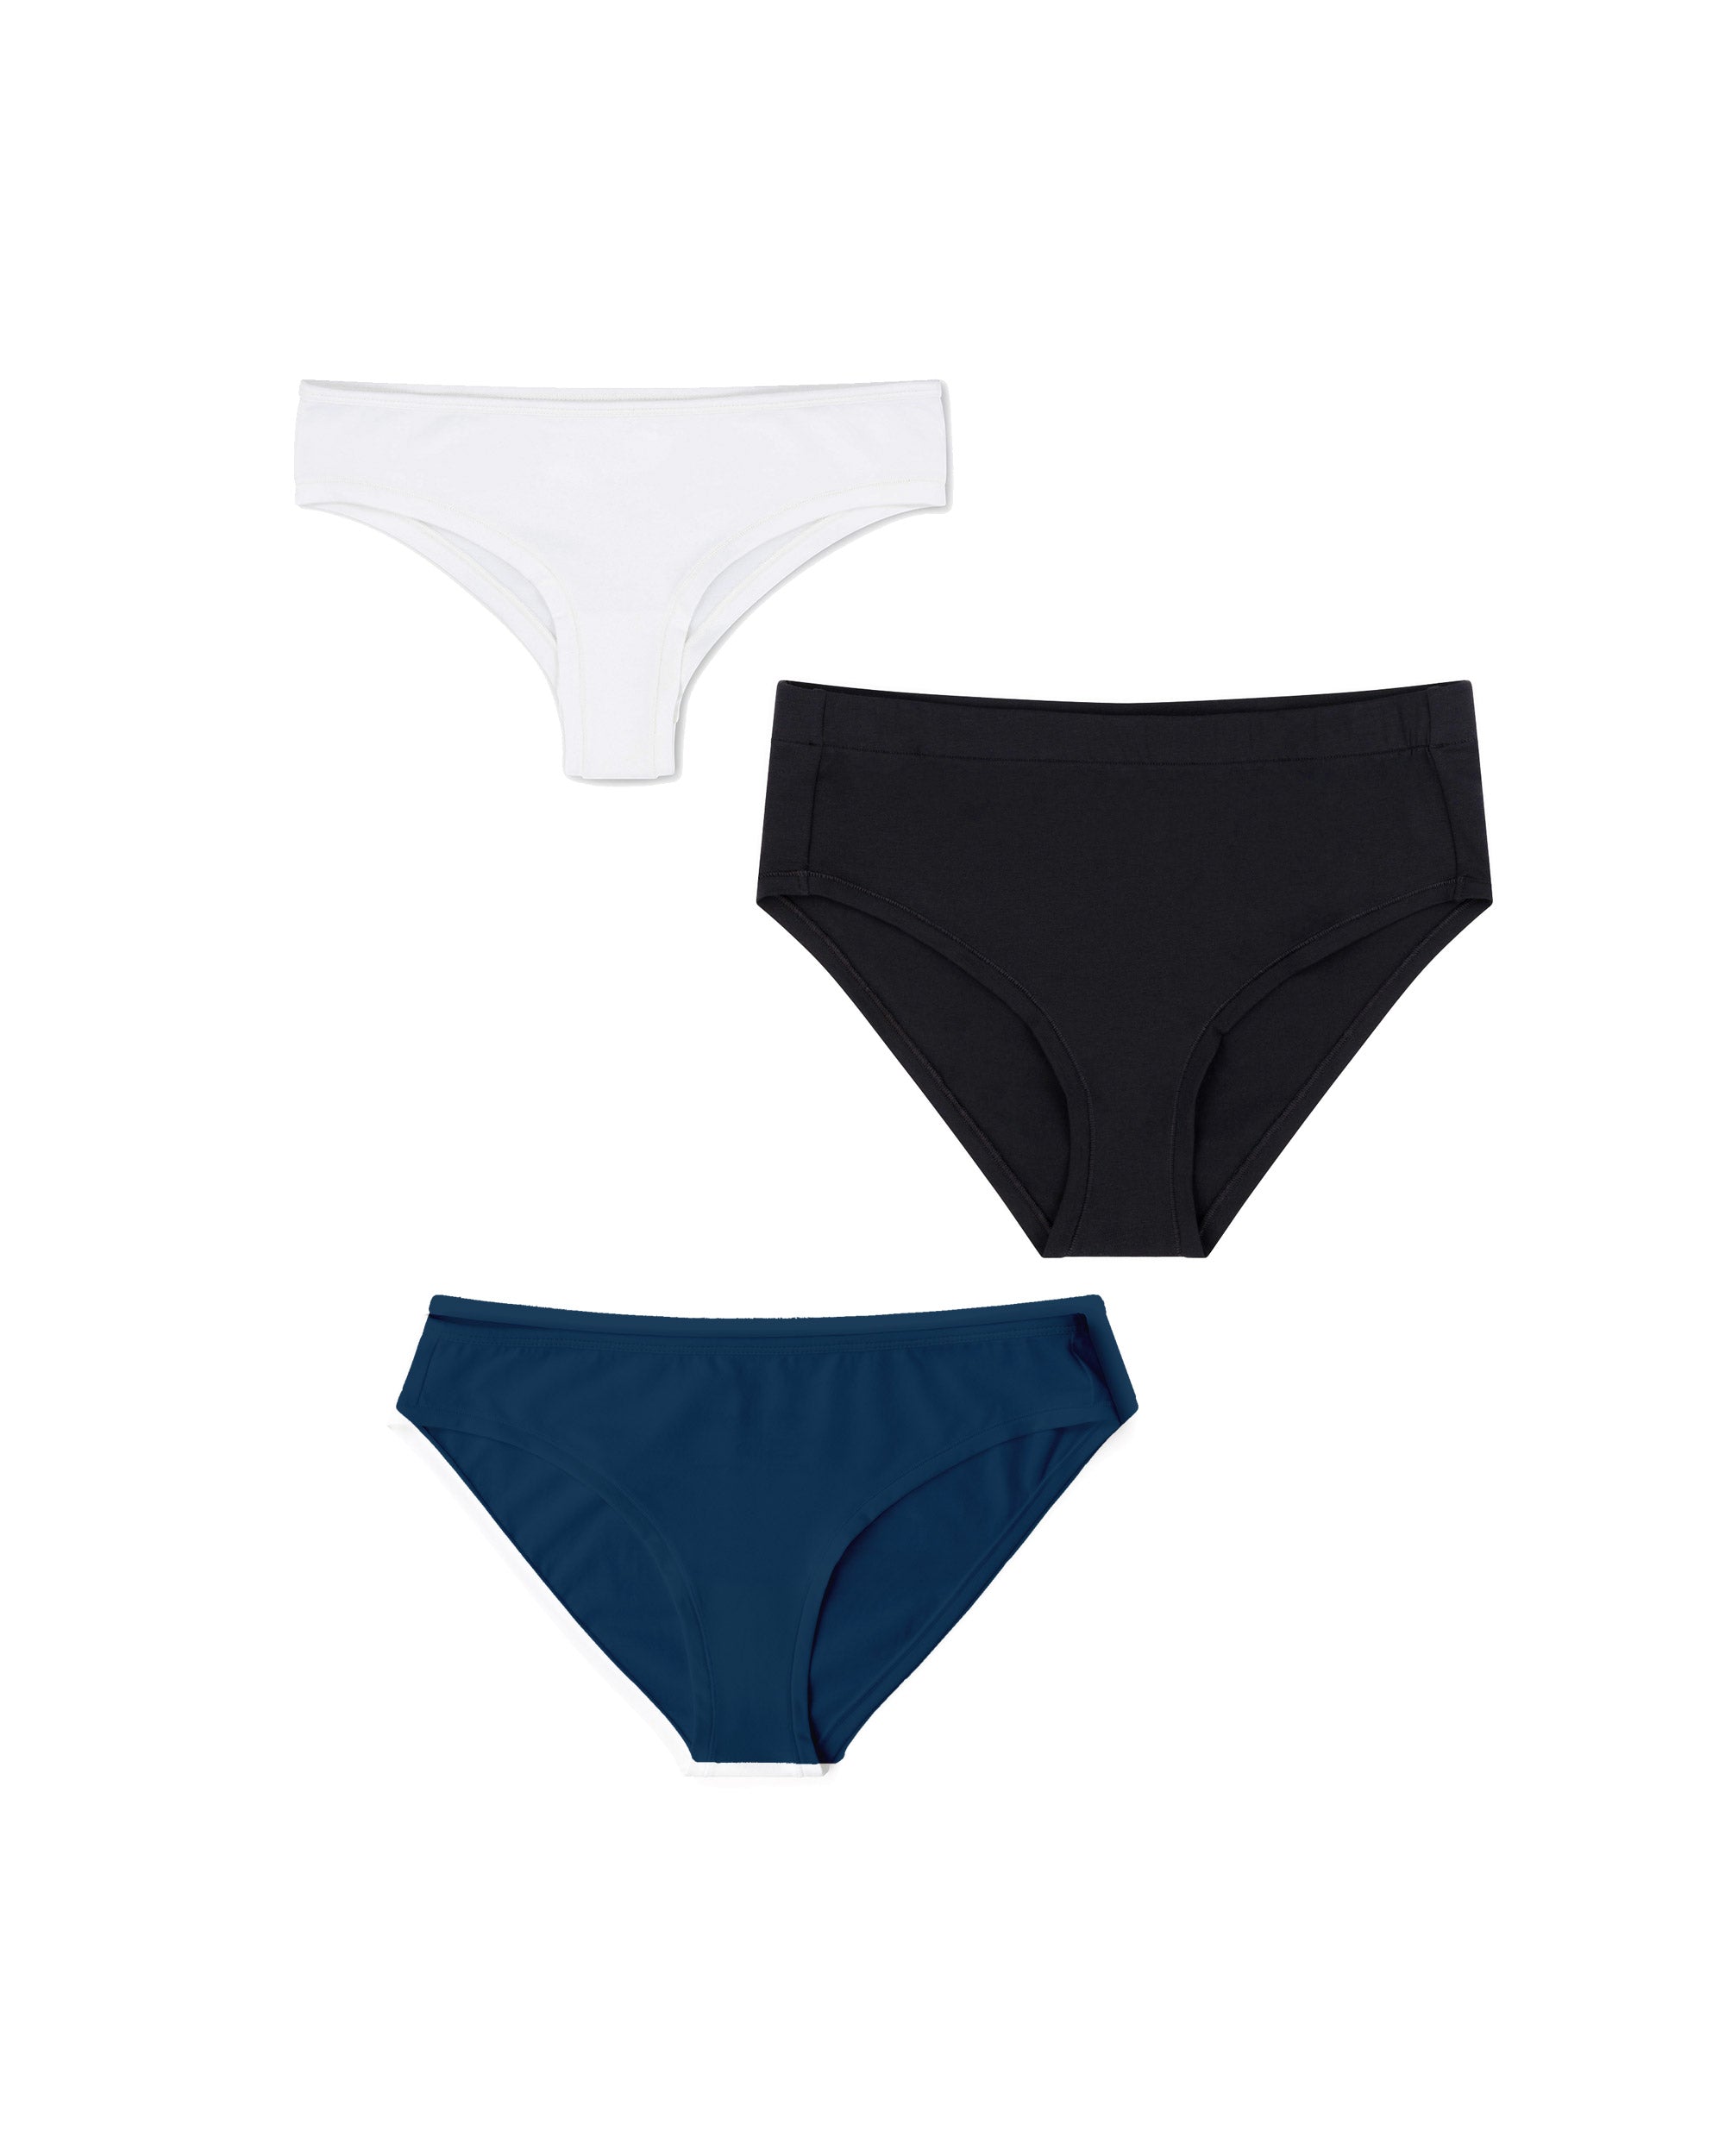 ONE Essentials Starter Set in Navy Black and White, organic cotton underwear with biodegradable stretch